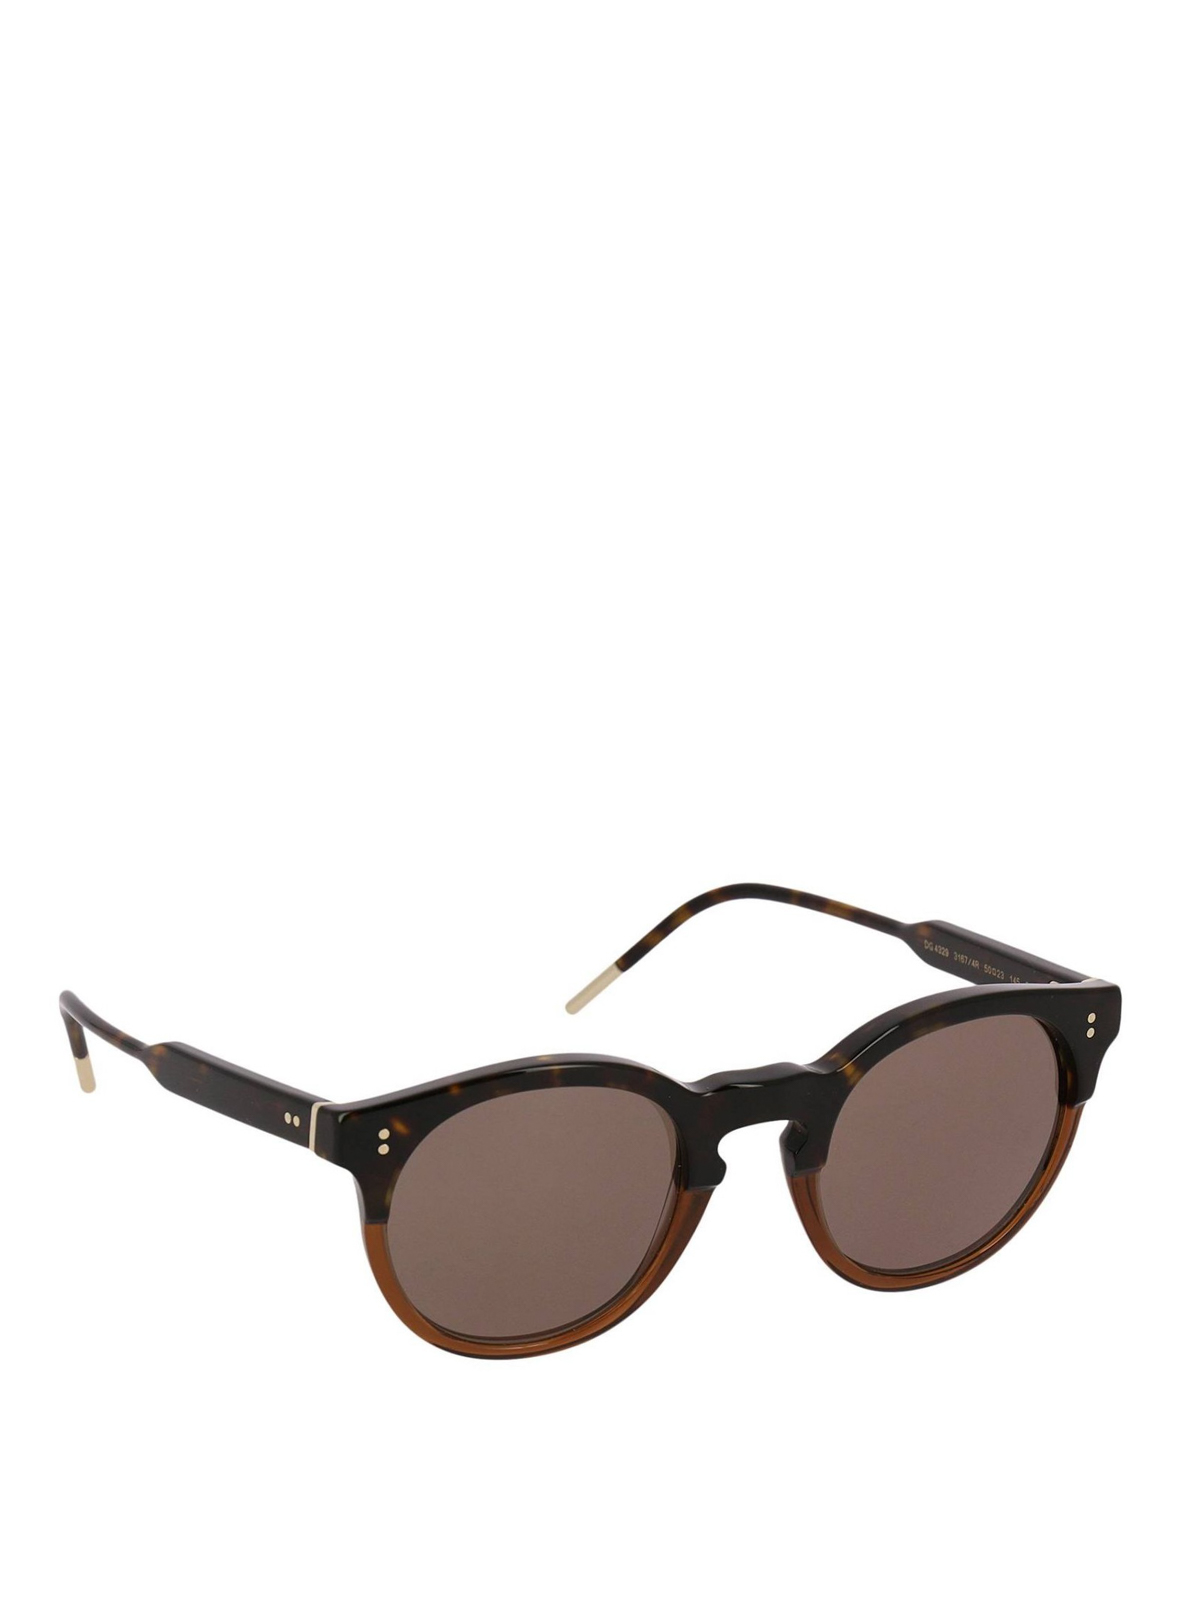 Sunglasses Dolce & Gabbana - Havana and brown phantos sunglasses -  DG4329314540